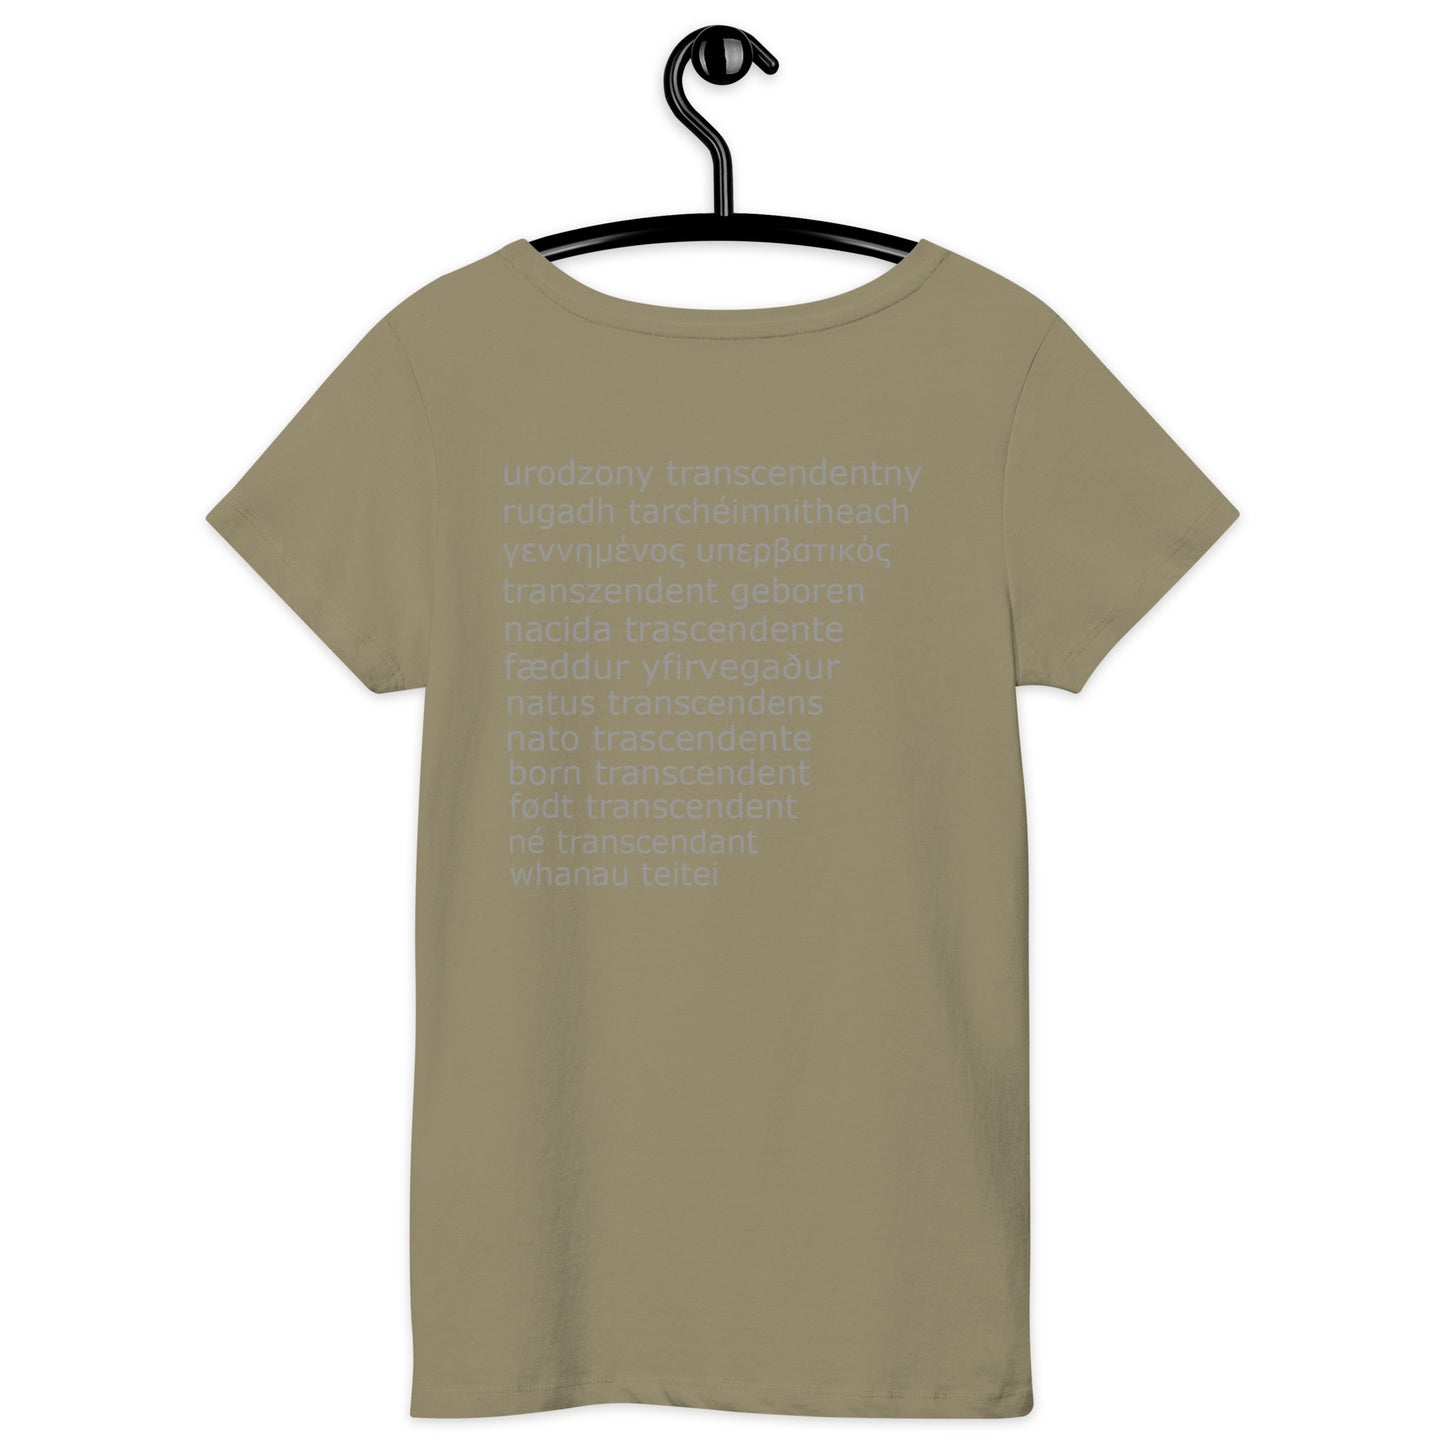 Bio Women's T-Shirt - Languages